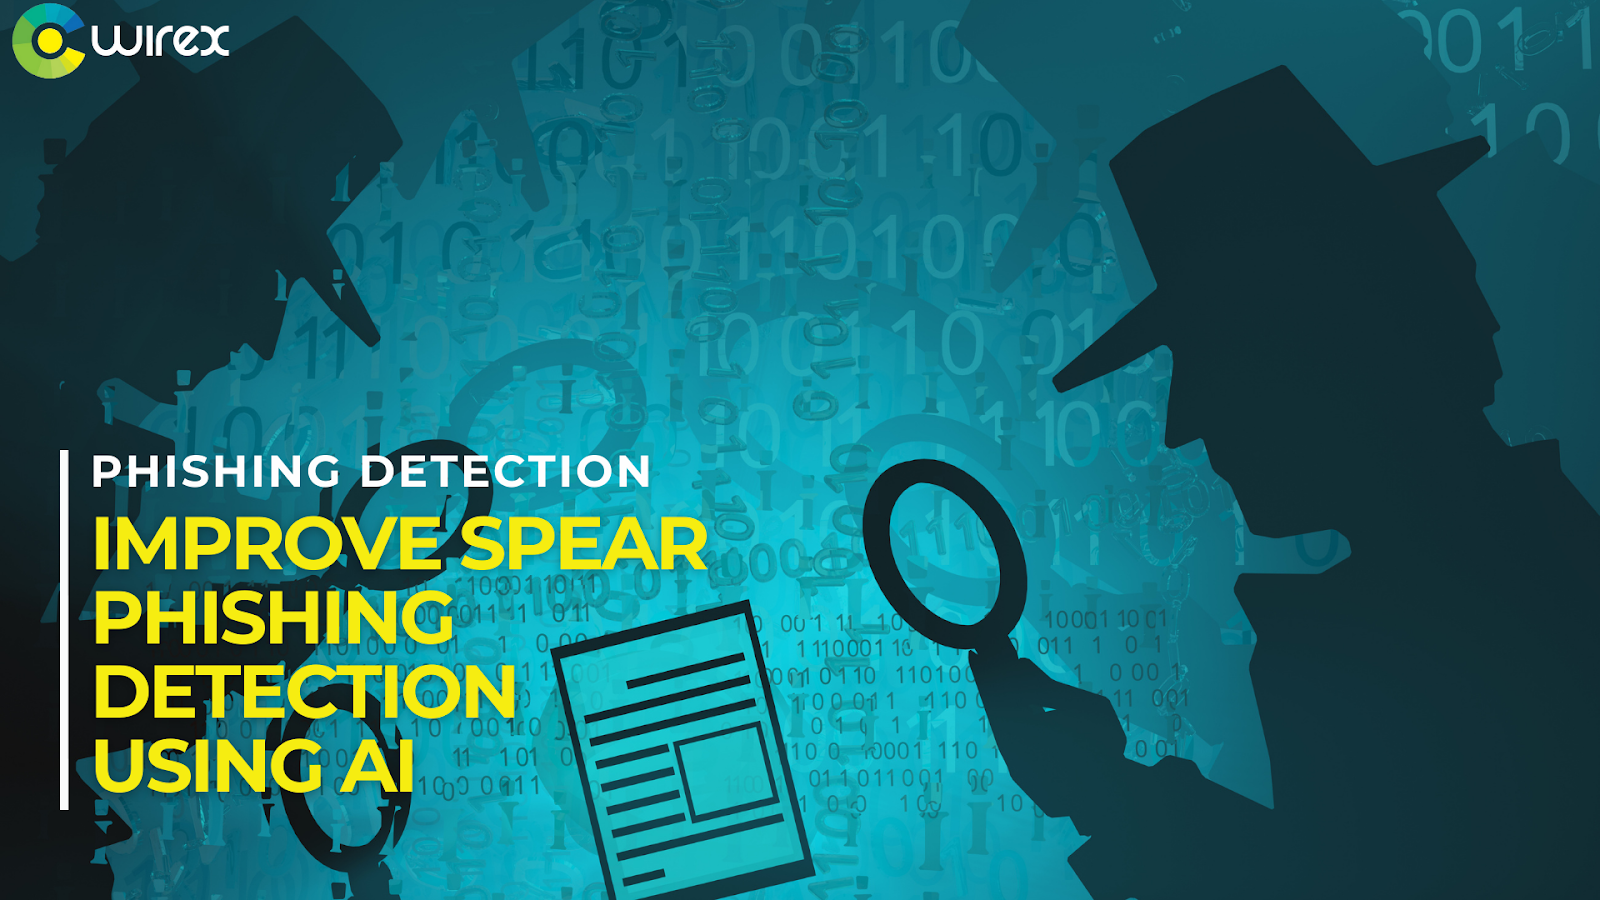 Phishing detection: improve spear phishing detection using AI